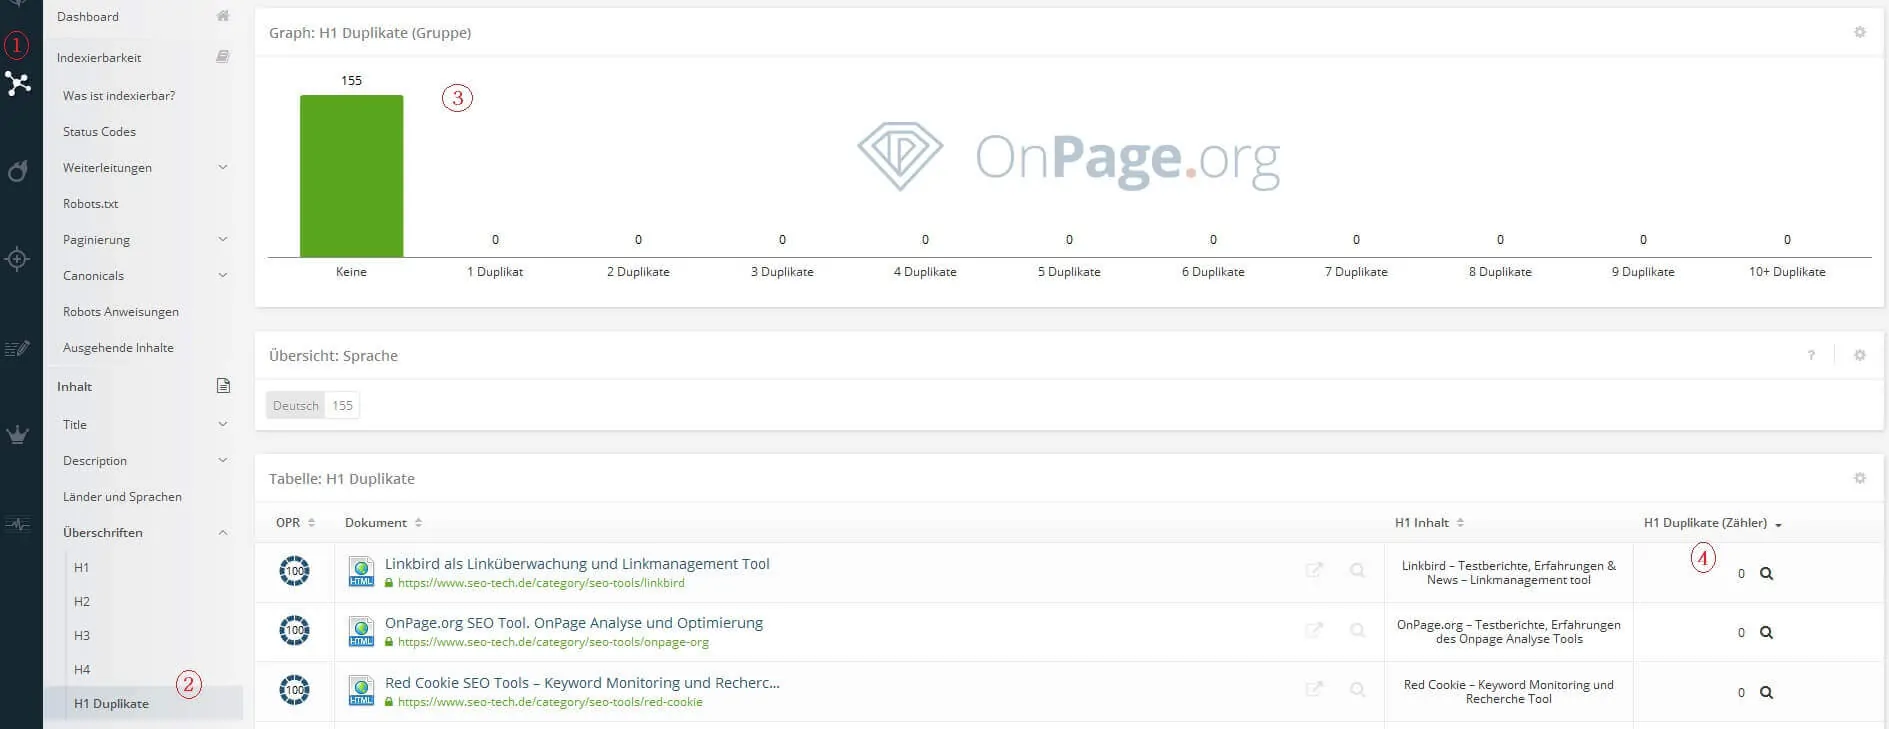 onpage.org H1 Duplikate